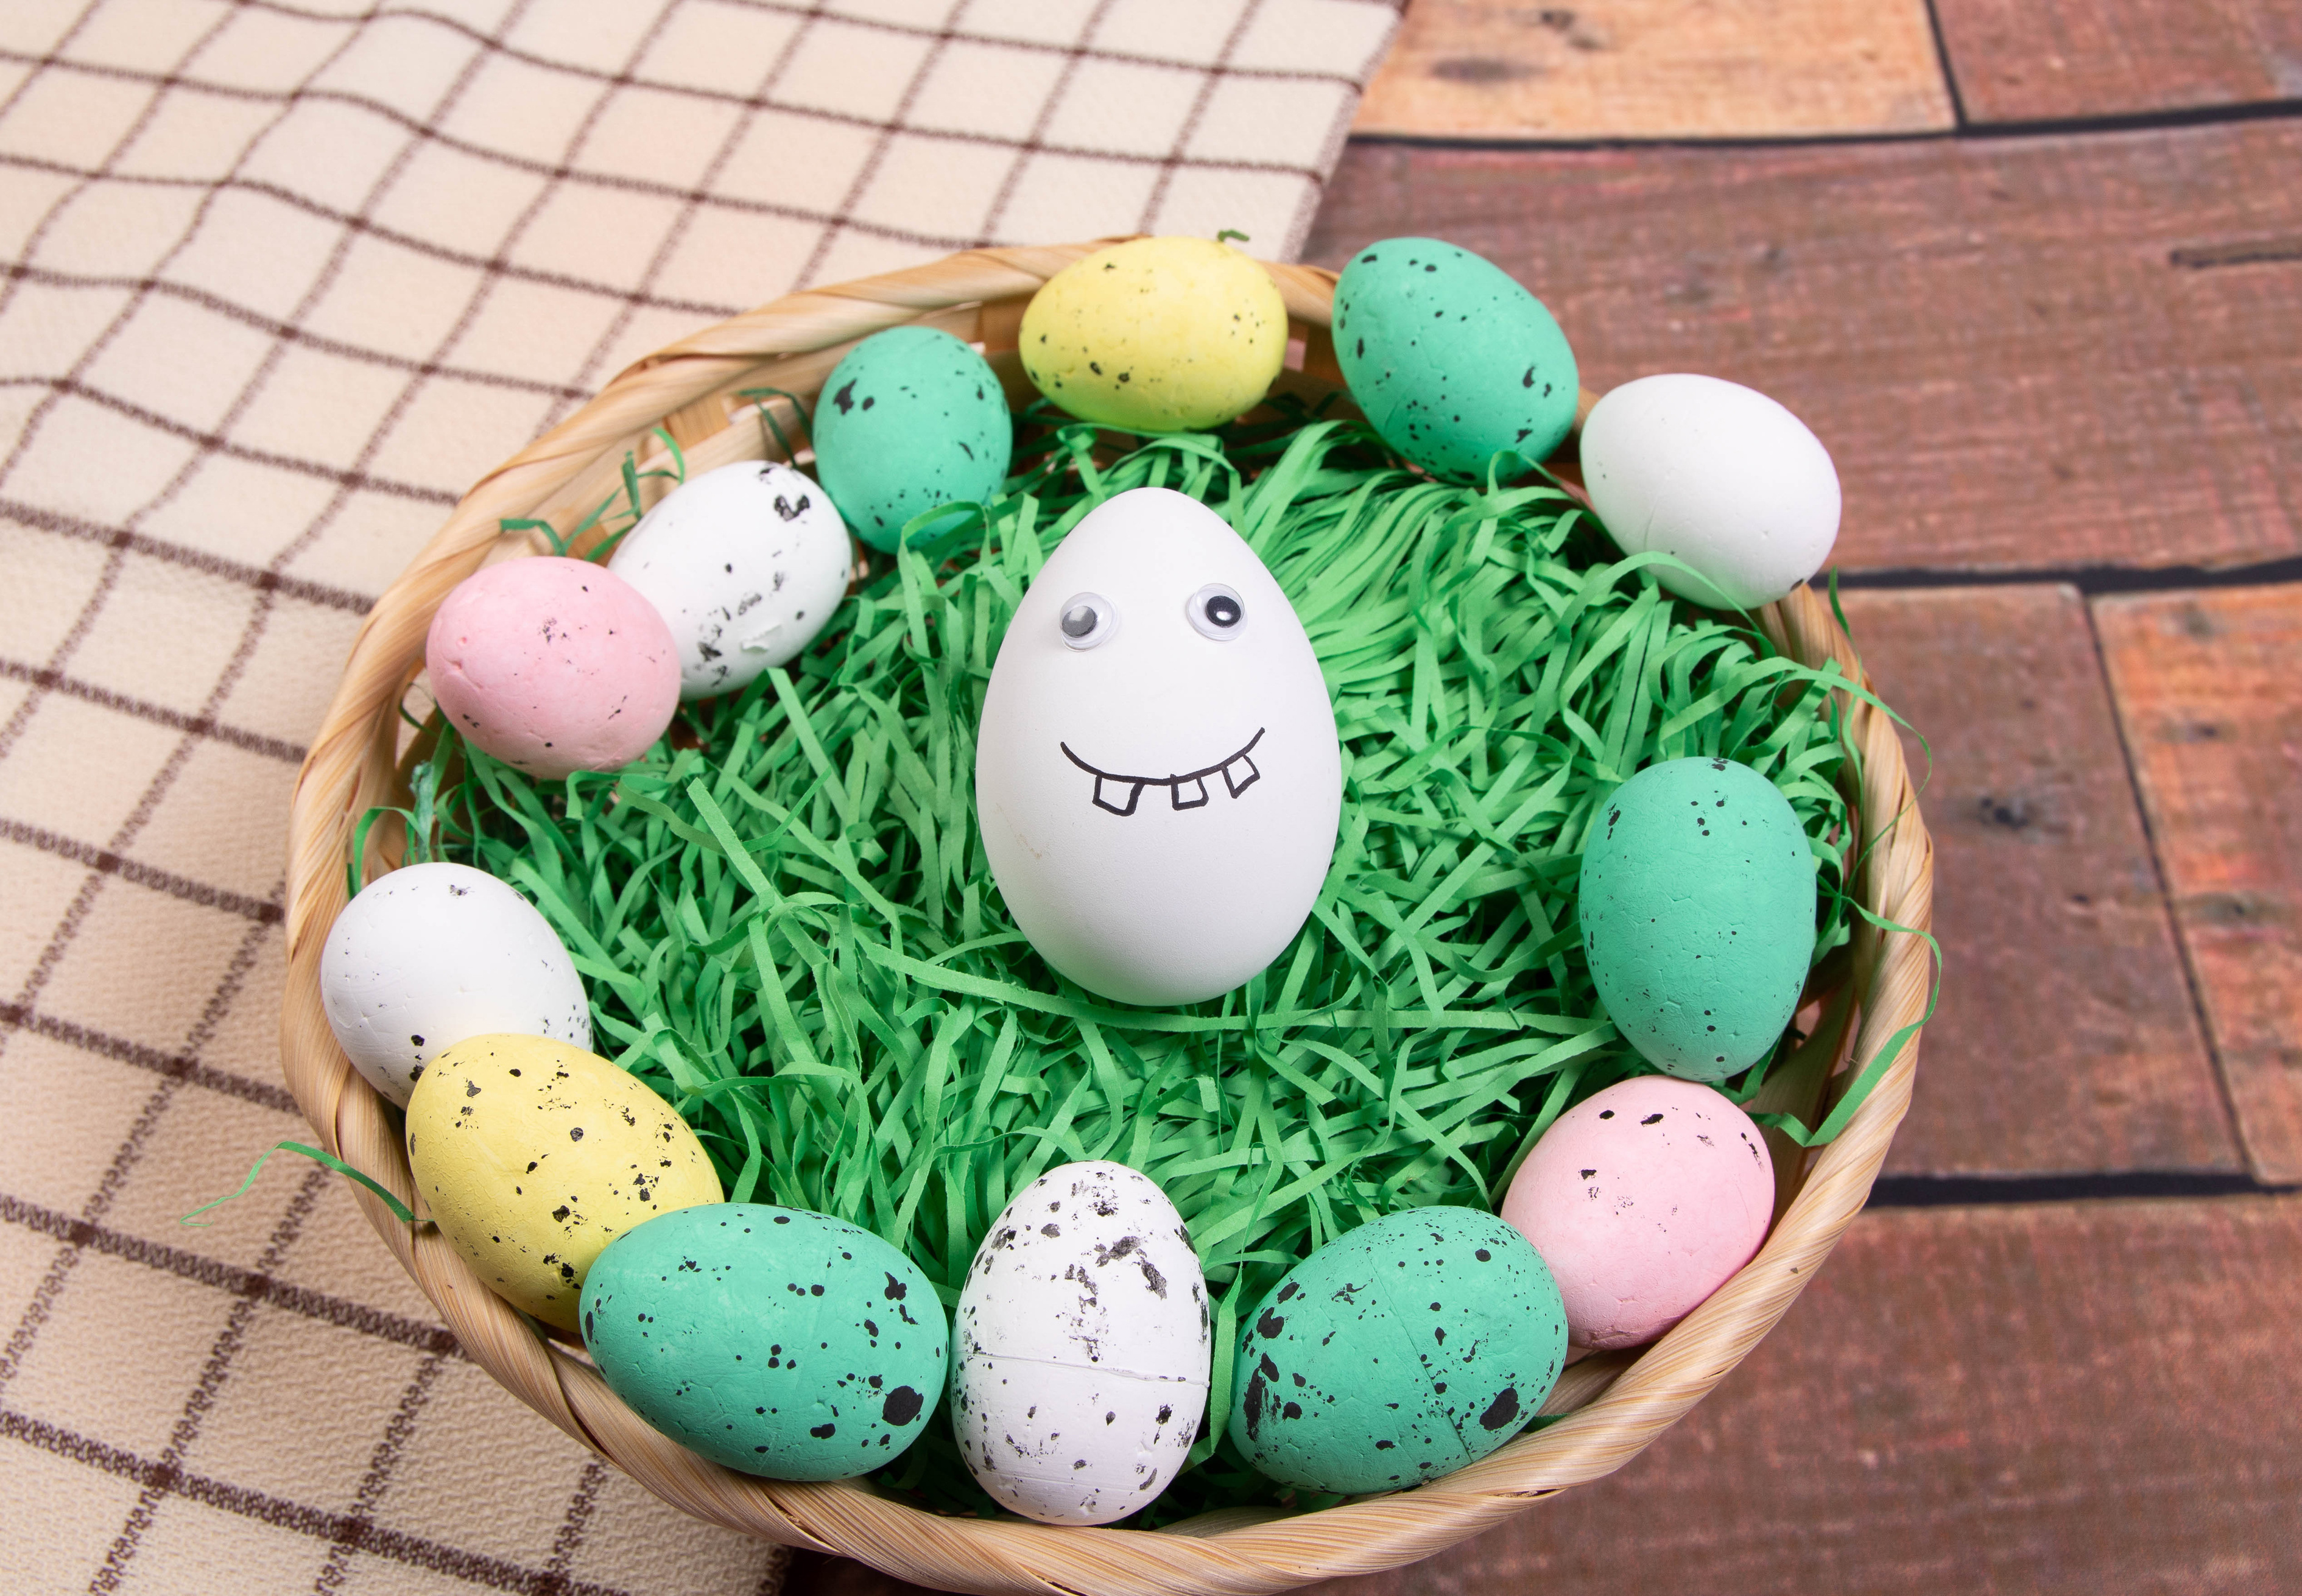 Картинка Пасха яиц Корзинка траве Продукты питания 3780x2621 яйцо Яйца яйцами Корзина корзины Еда Пища Трава